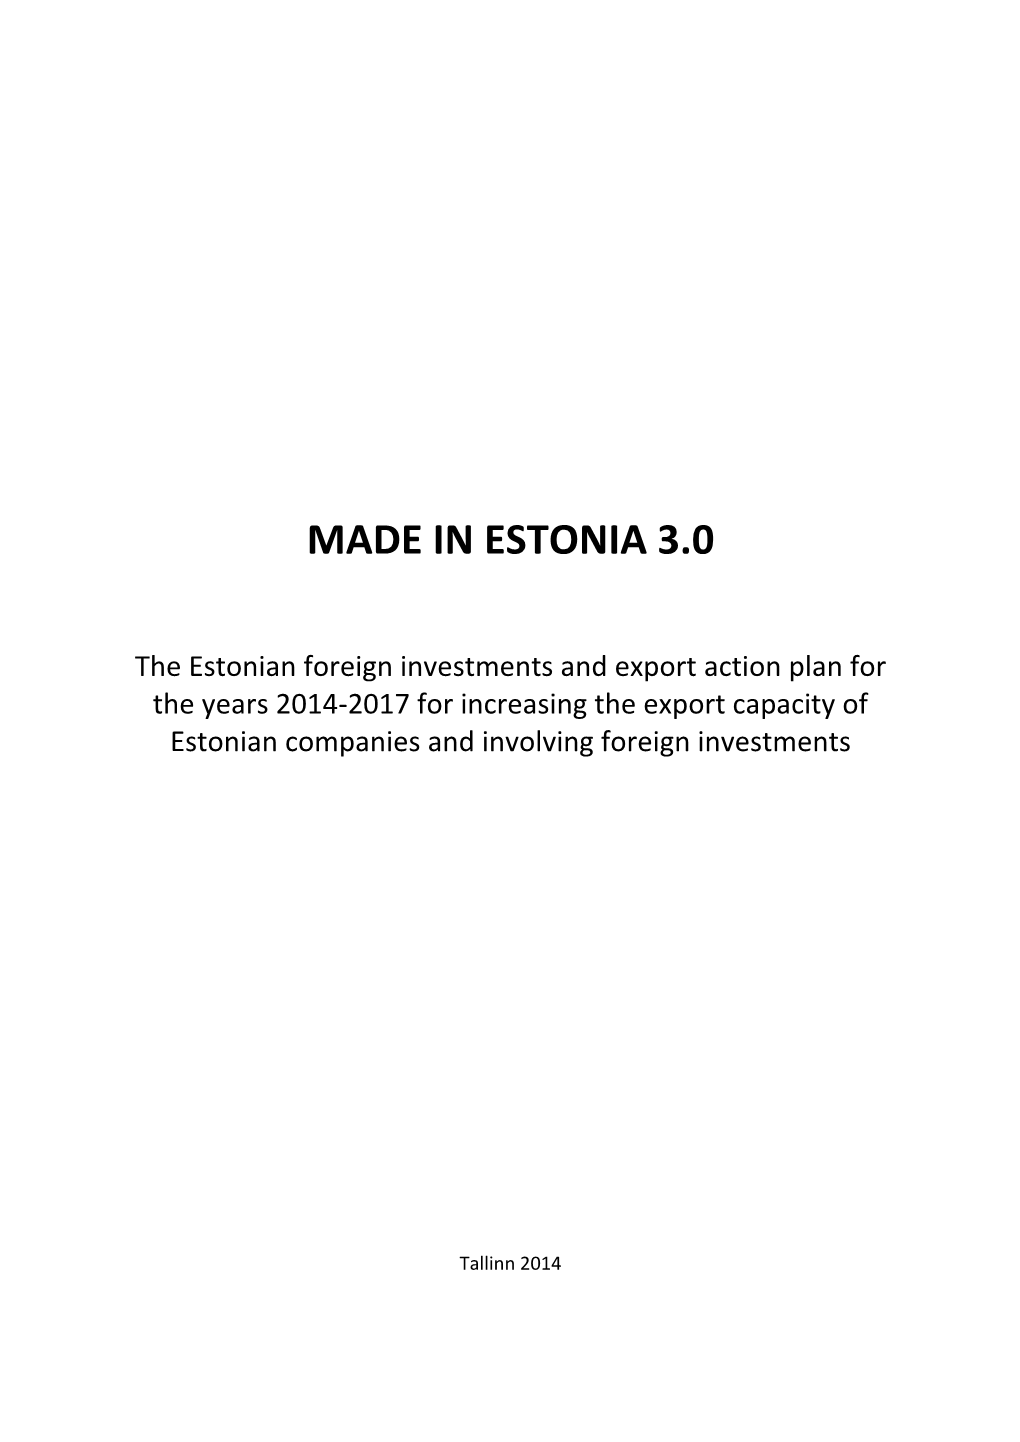 Made in Estonia 3.0